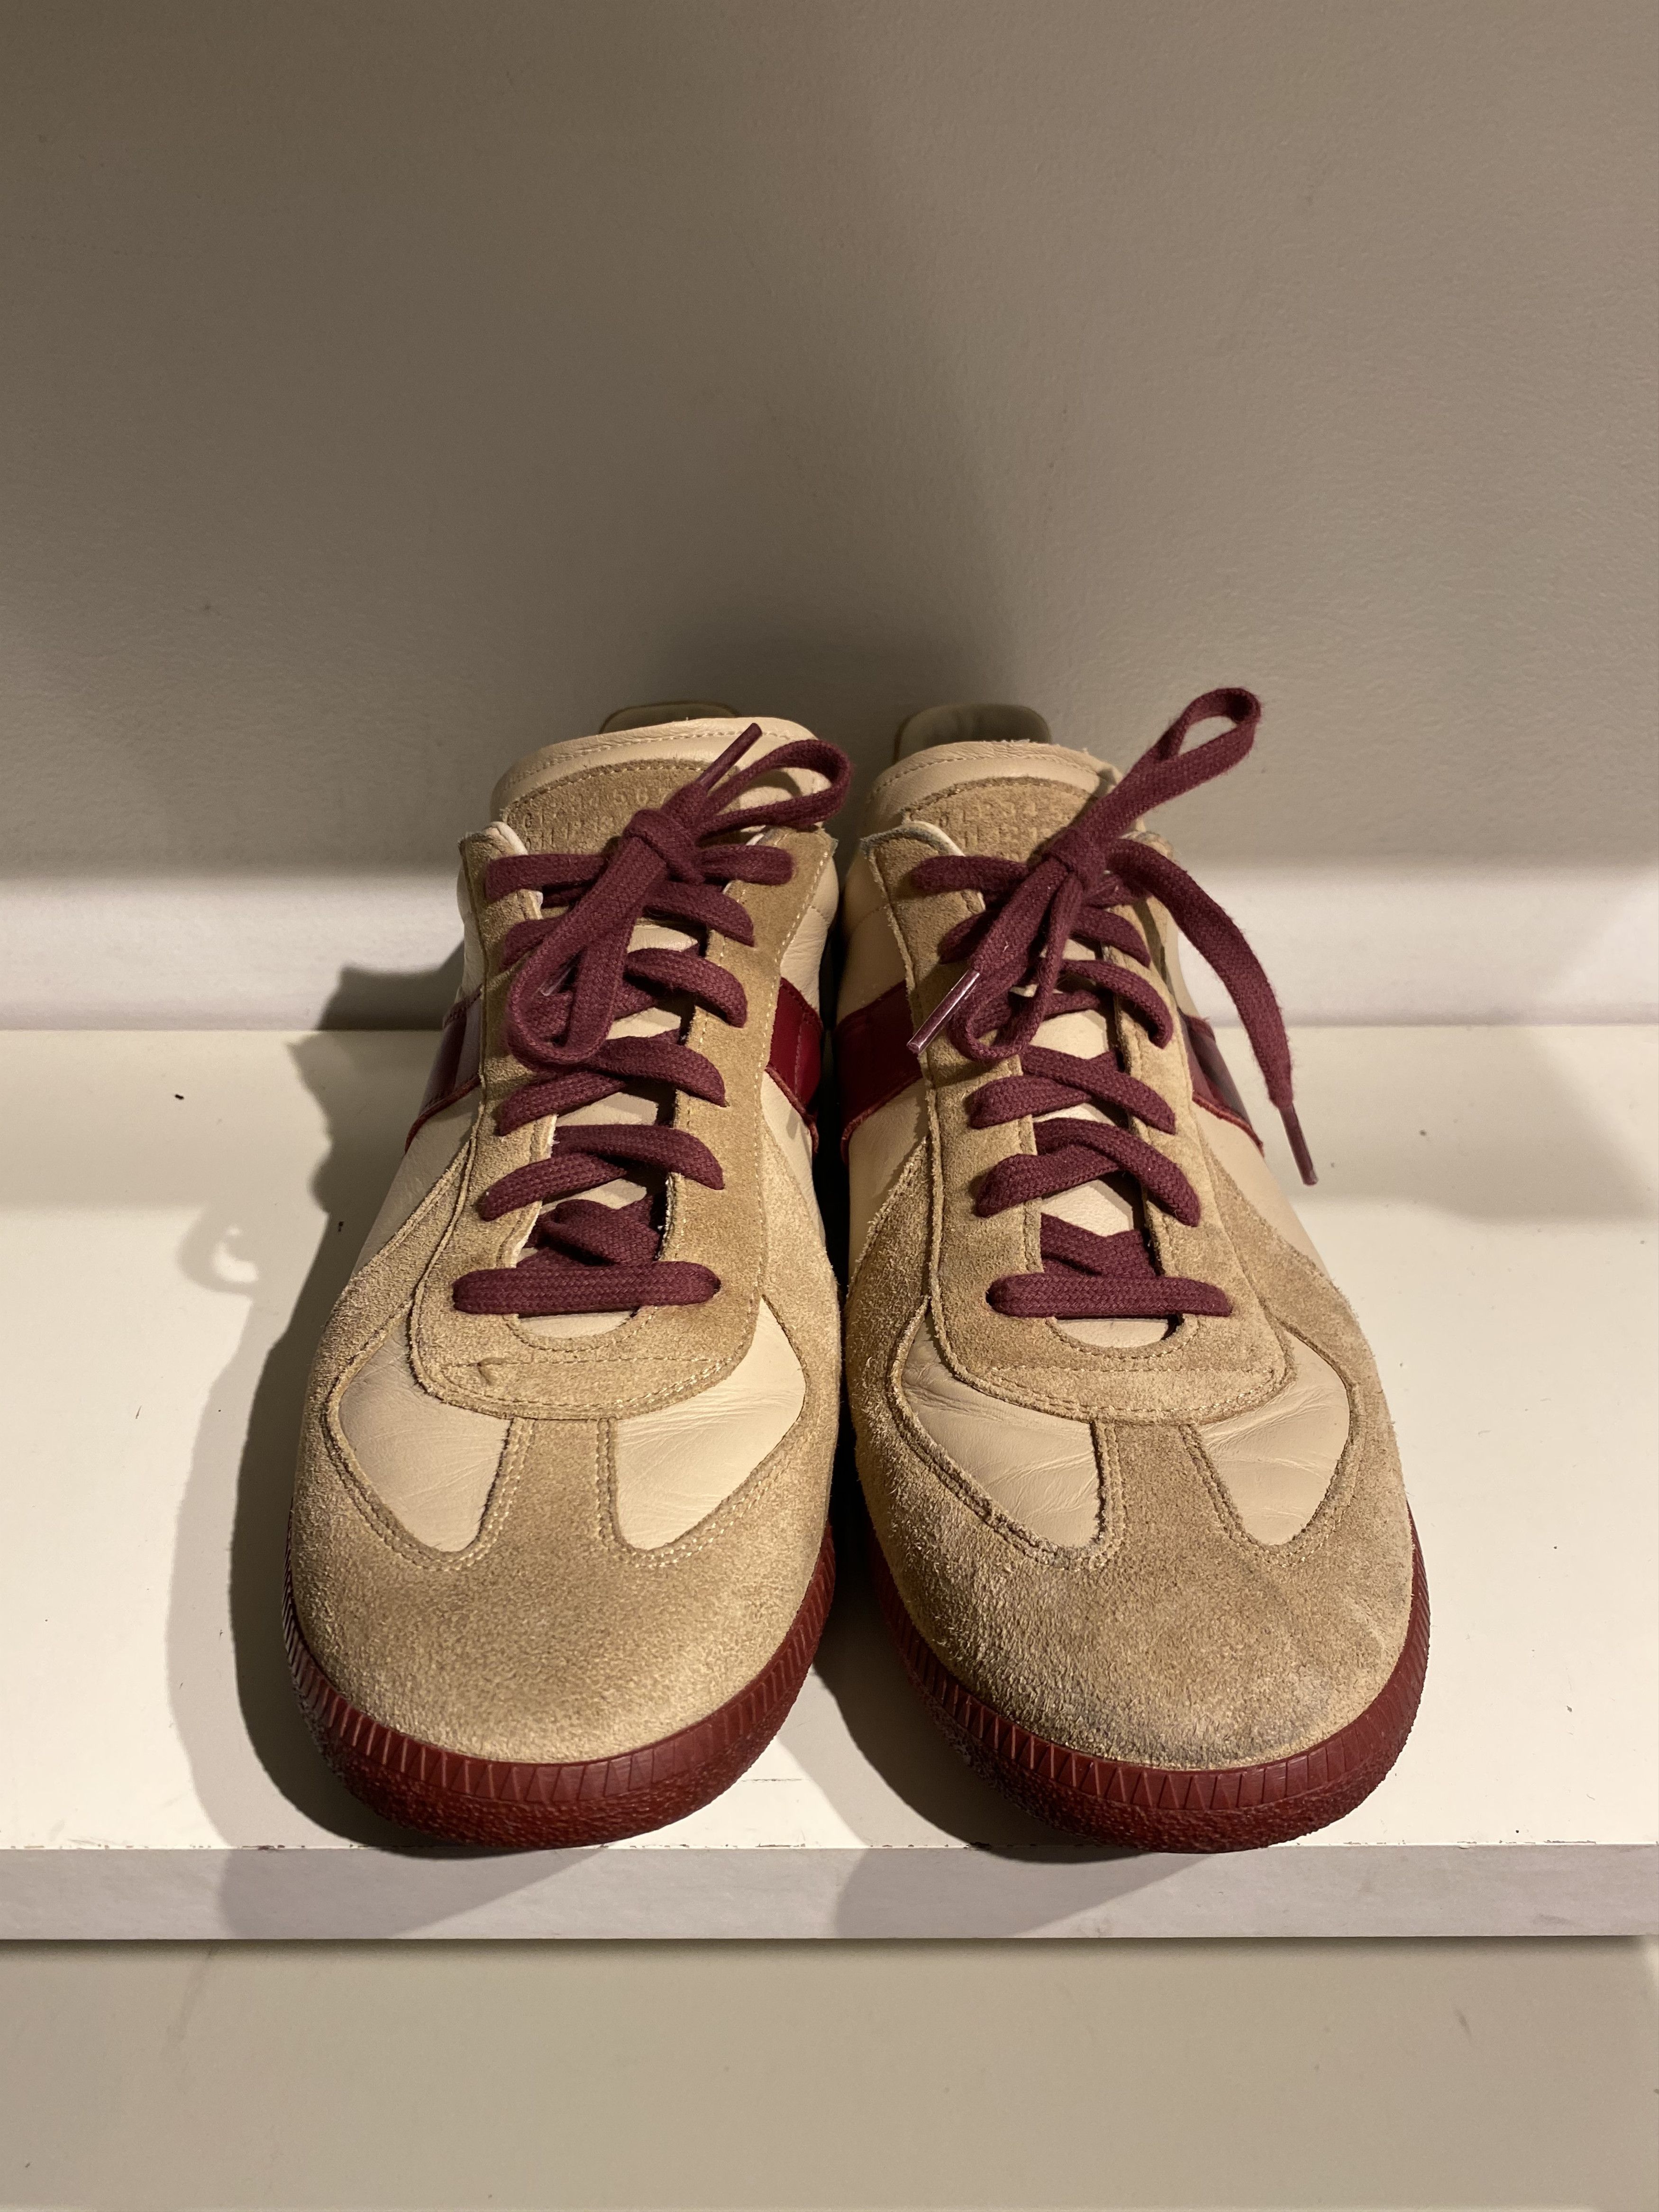 Pre-owned Maison Margiela Gat Replica Low Tan/burgundy Sneakers